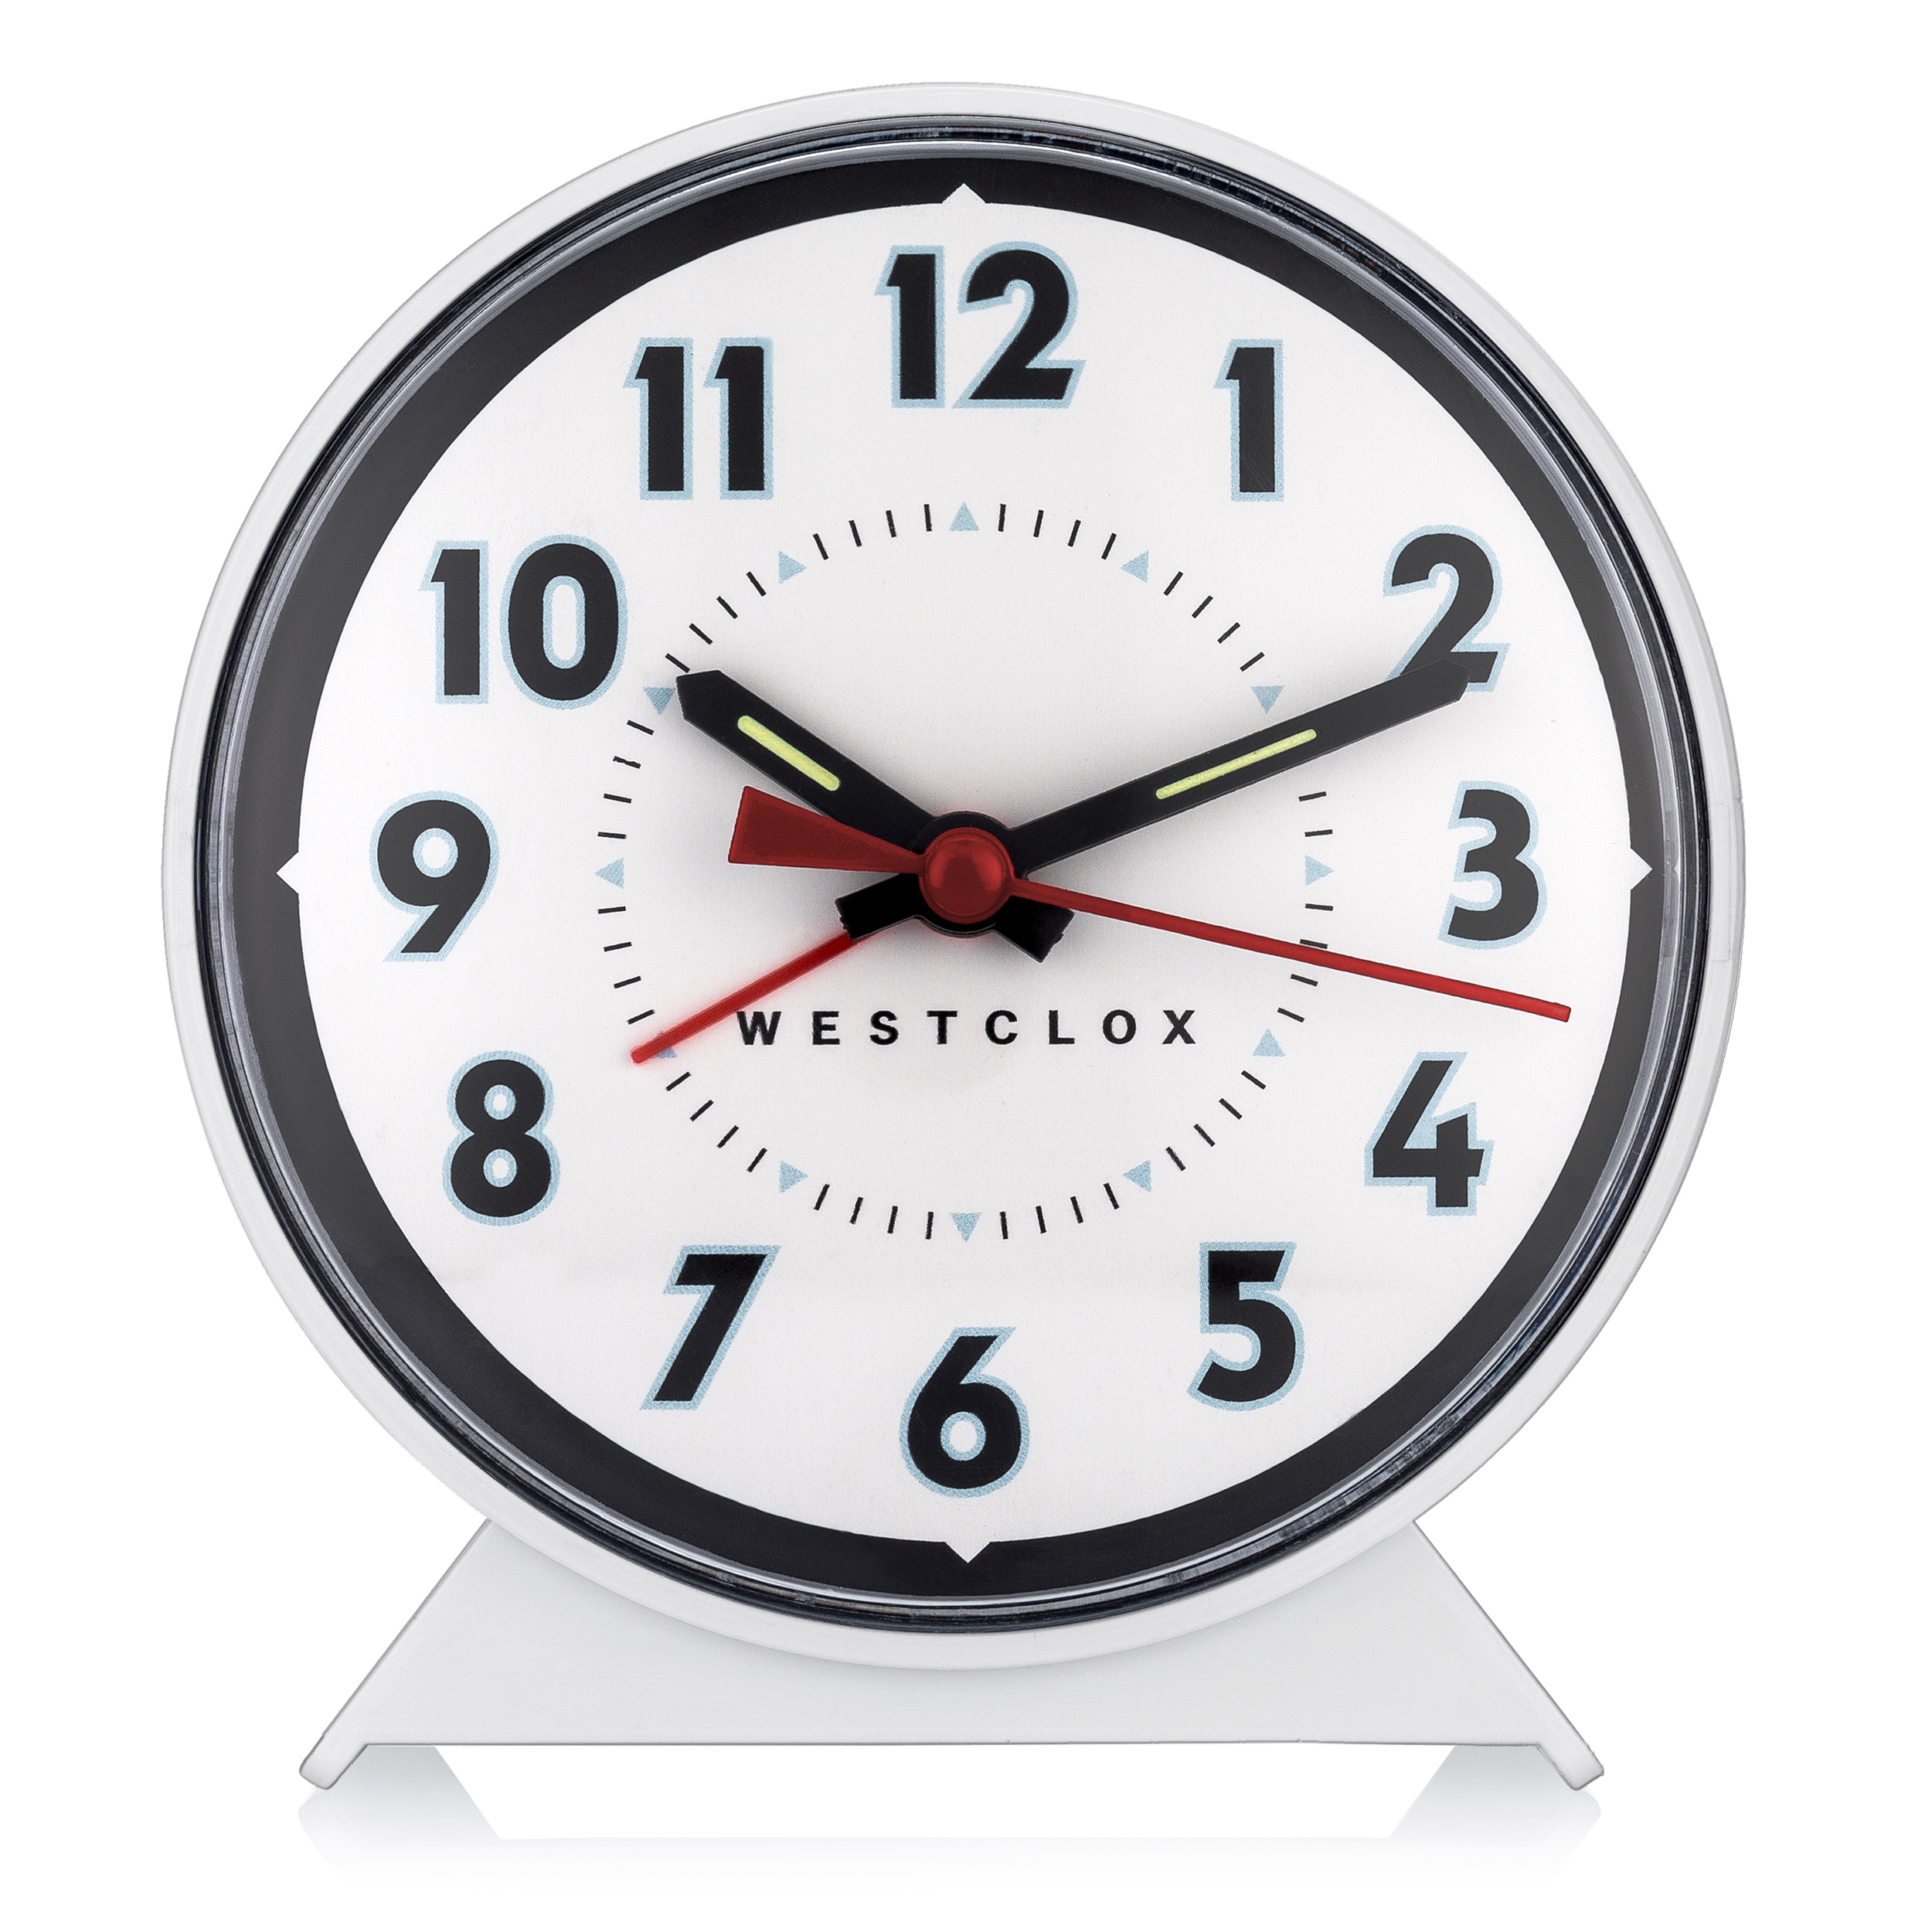 Westclox Retro Style Analog Mechanical Keywound Bedside or Desk Alarm Clock - White Dial - image 2 of 4